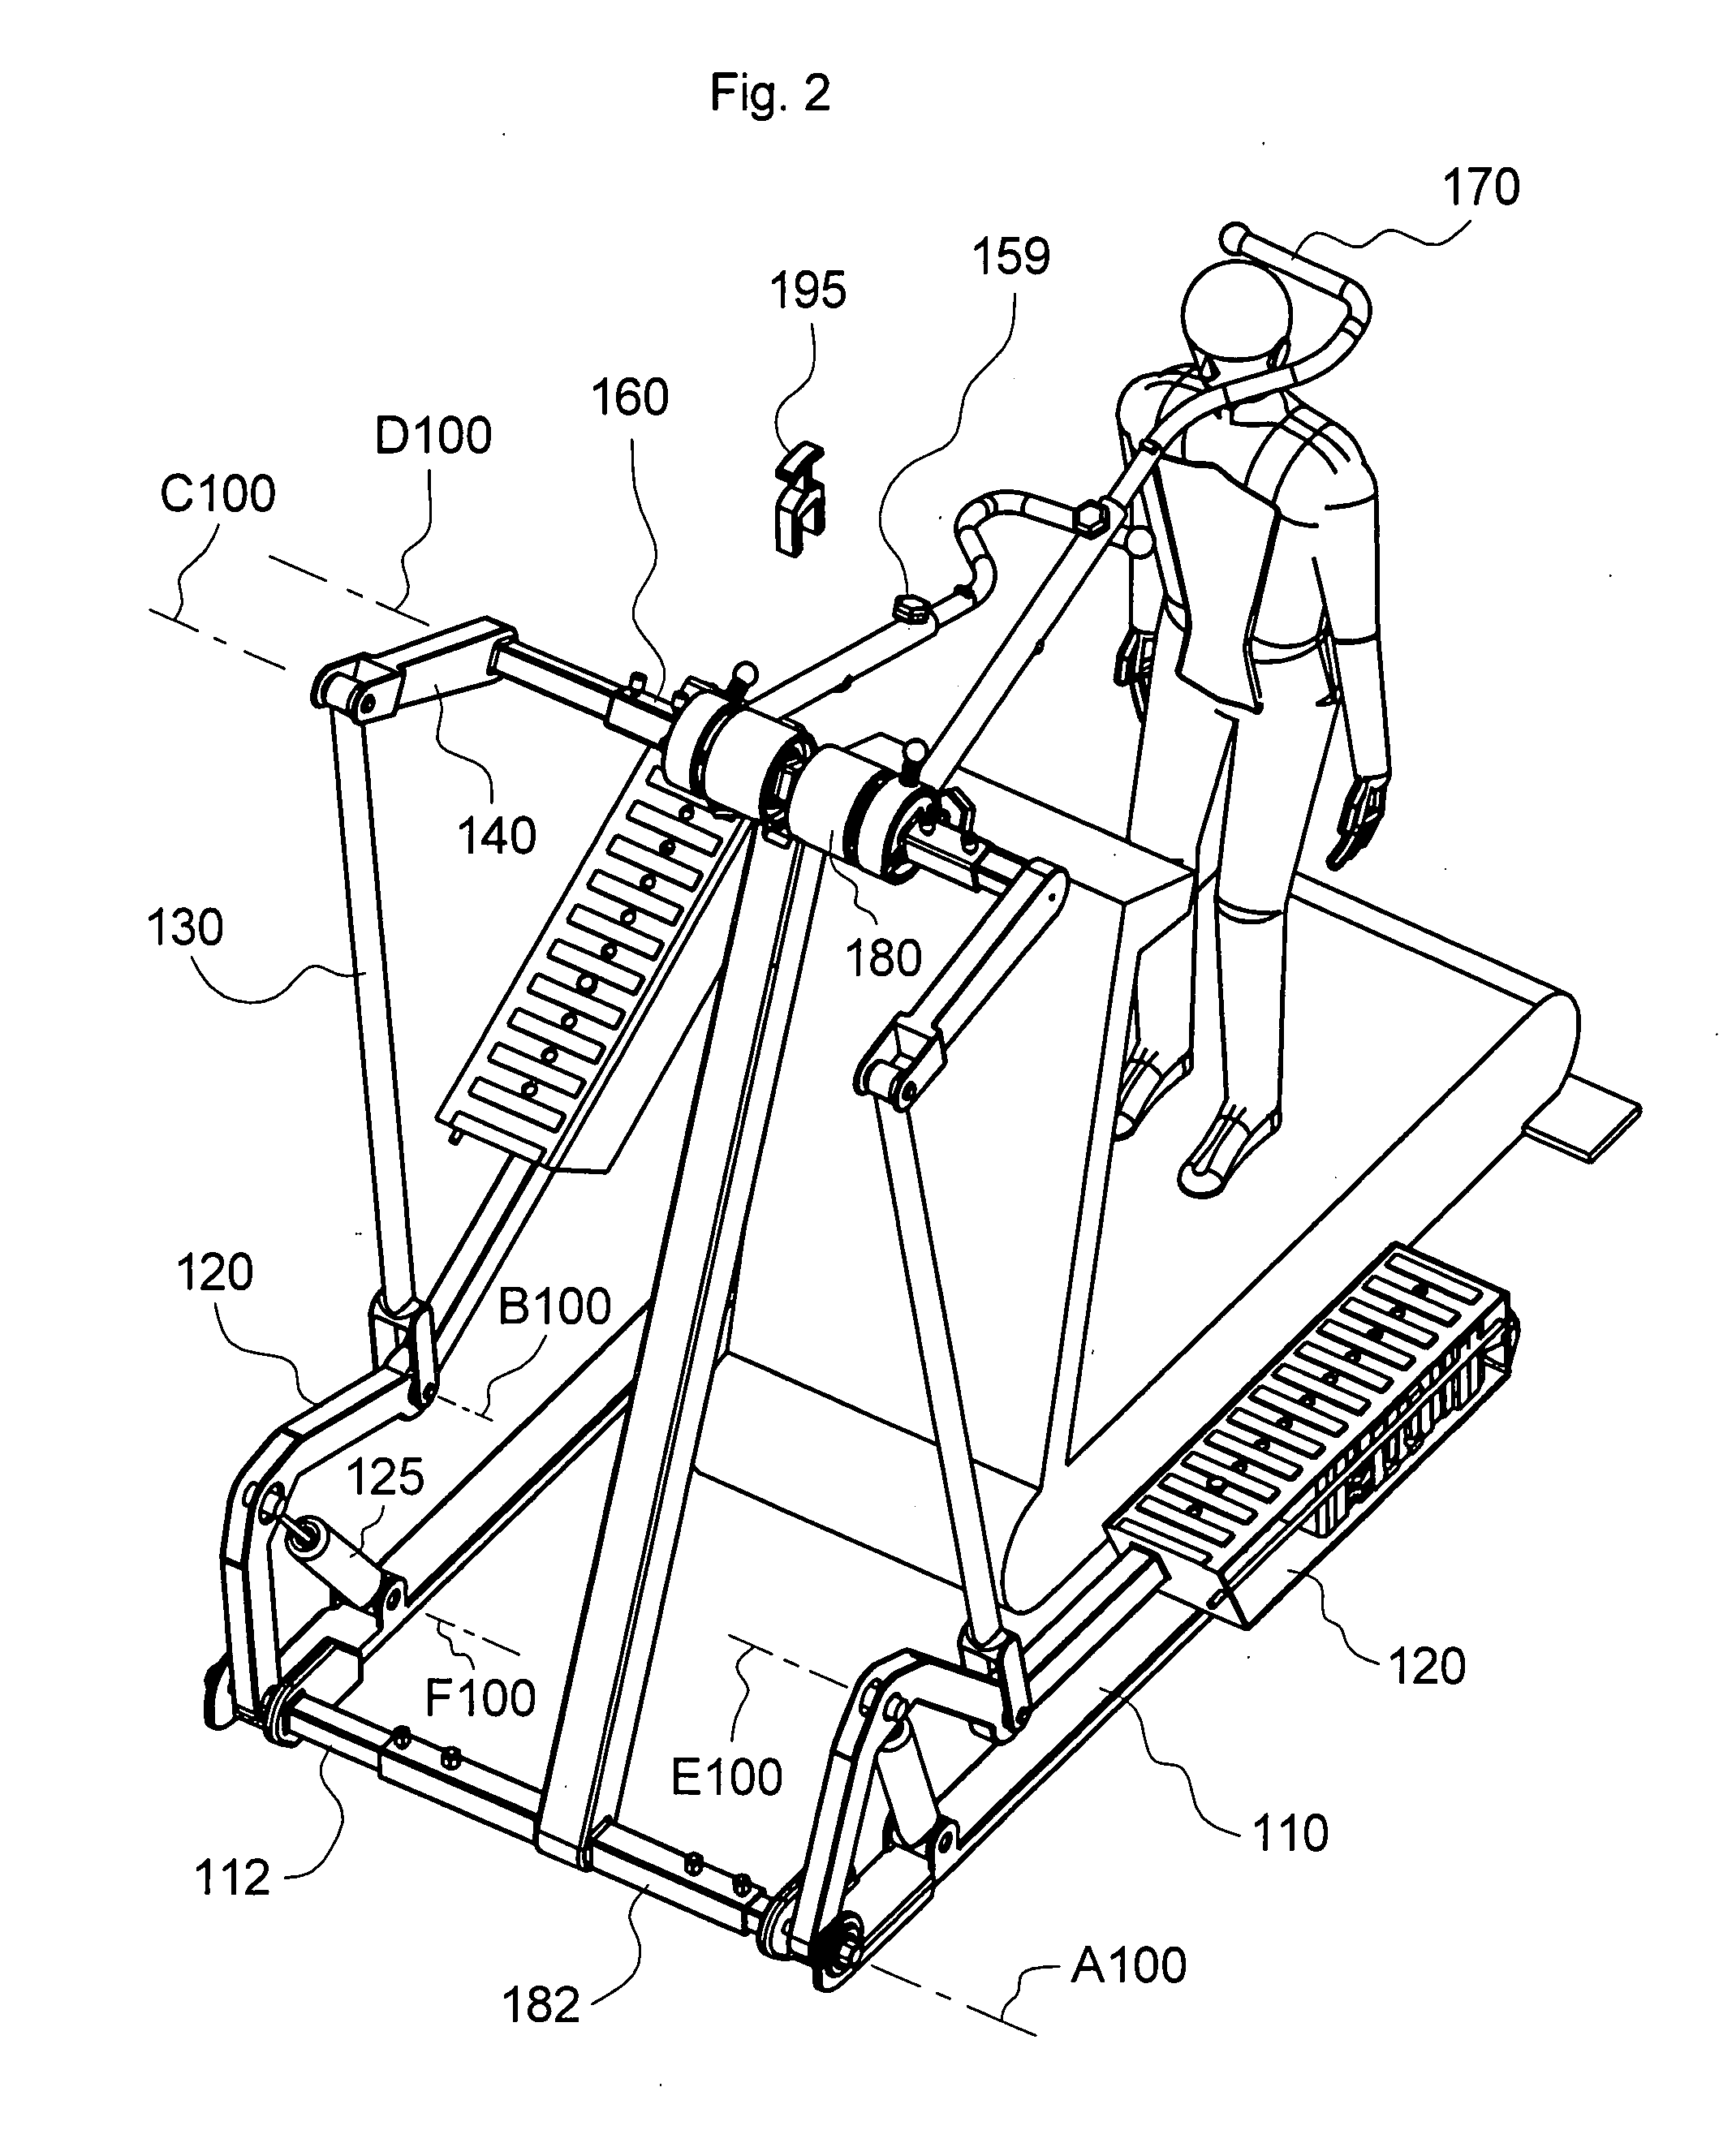 Treadmill apparatus